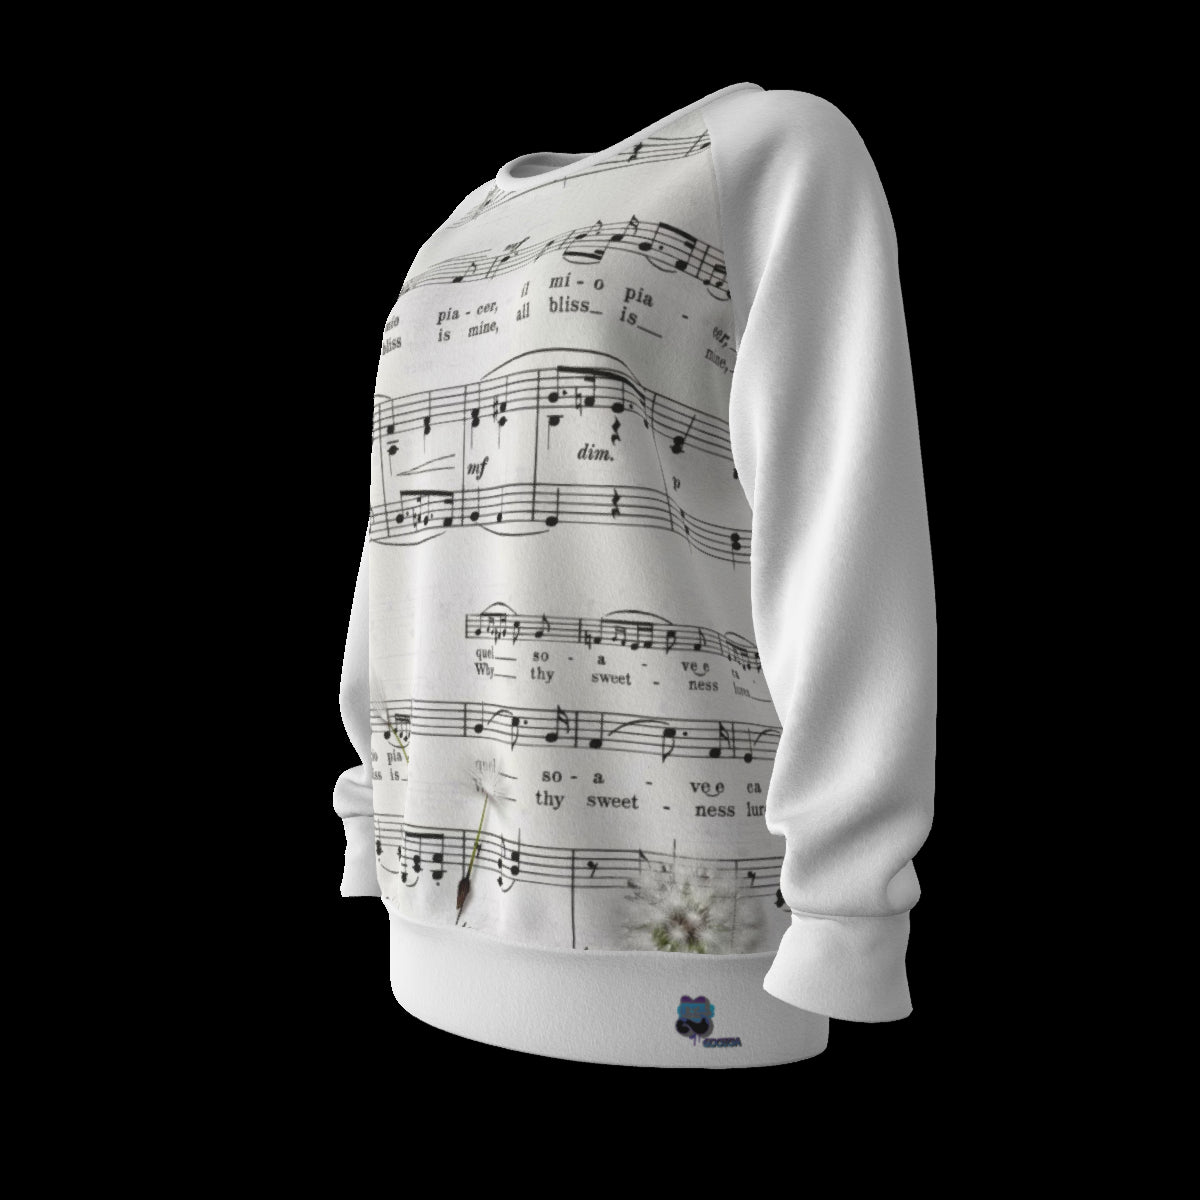 Lyrical Comforting Sweatshirt for Women's